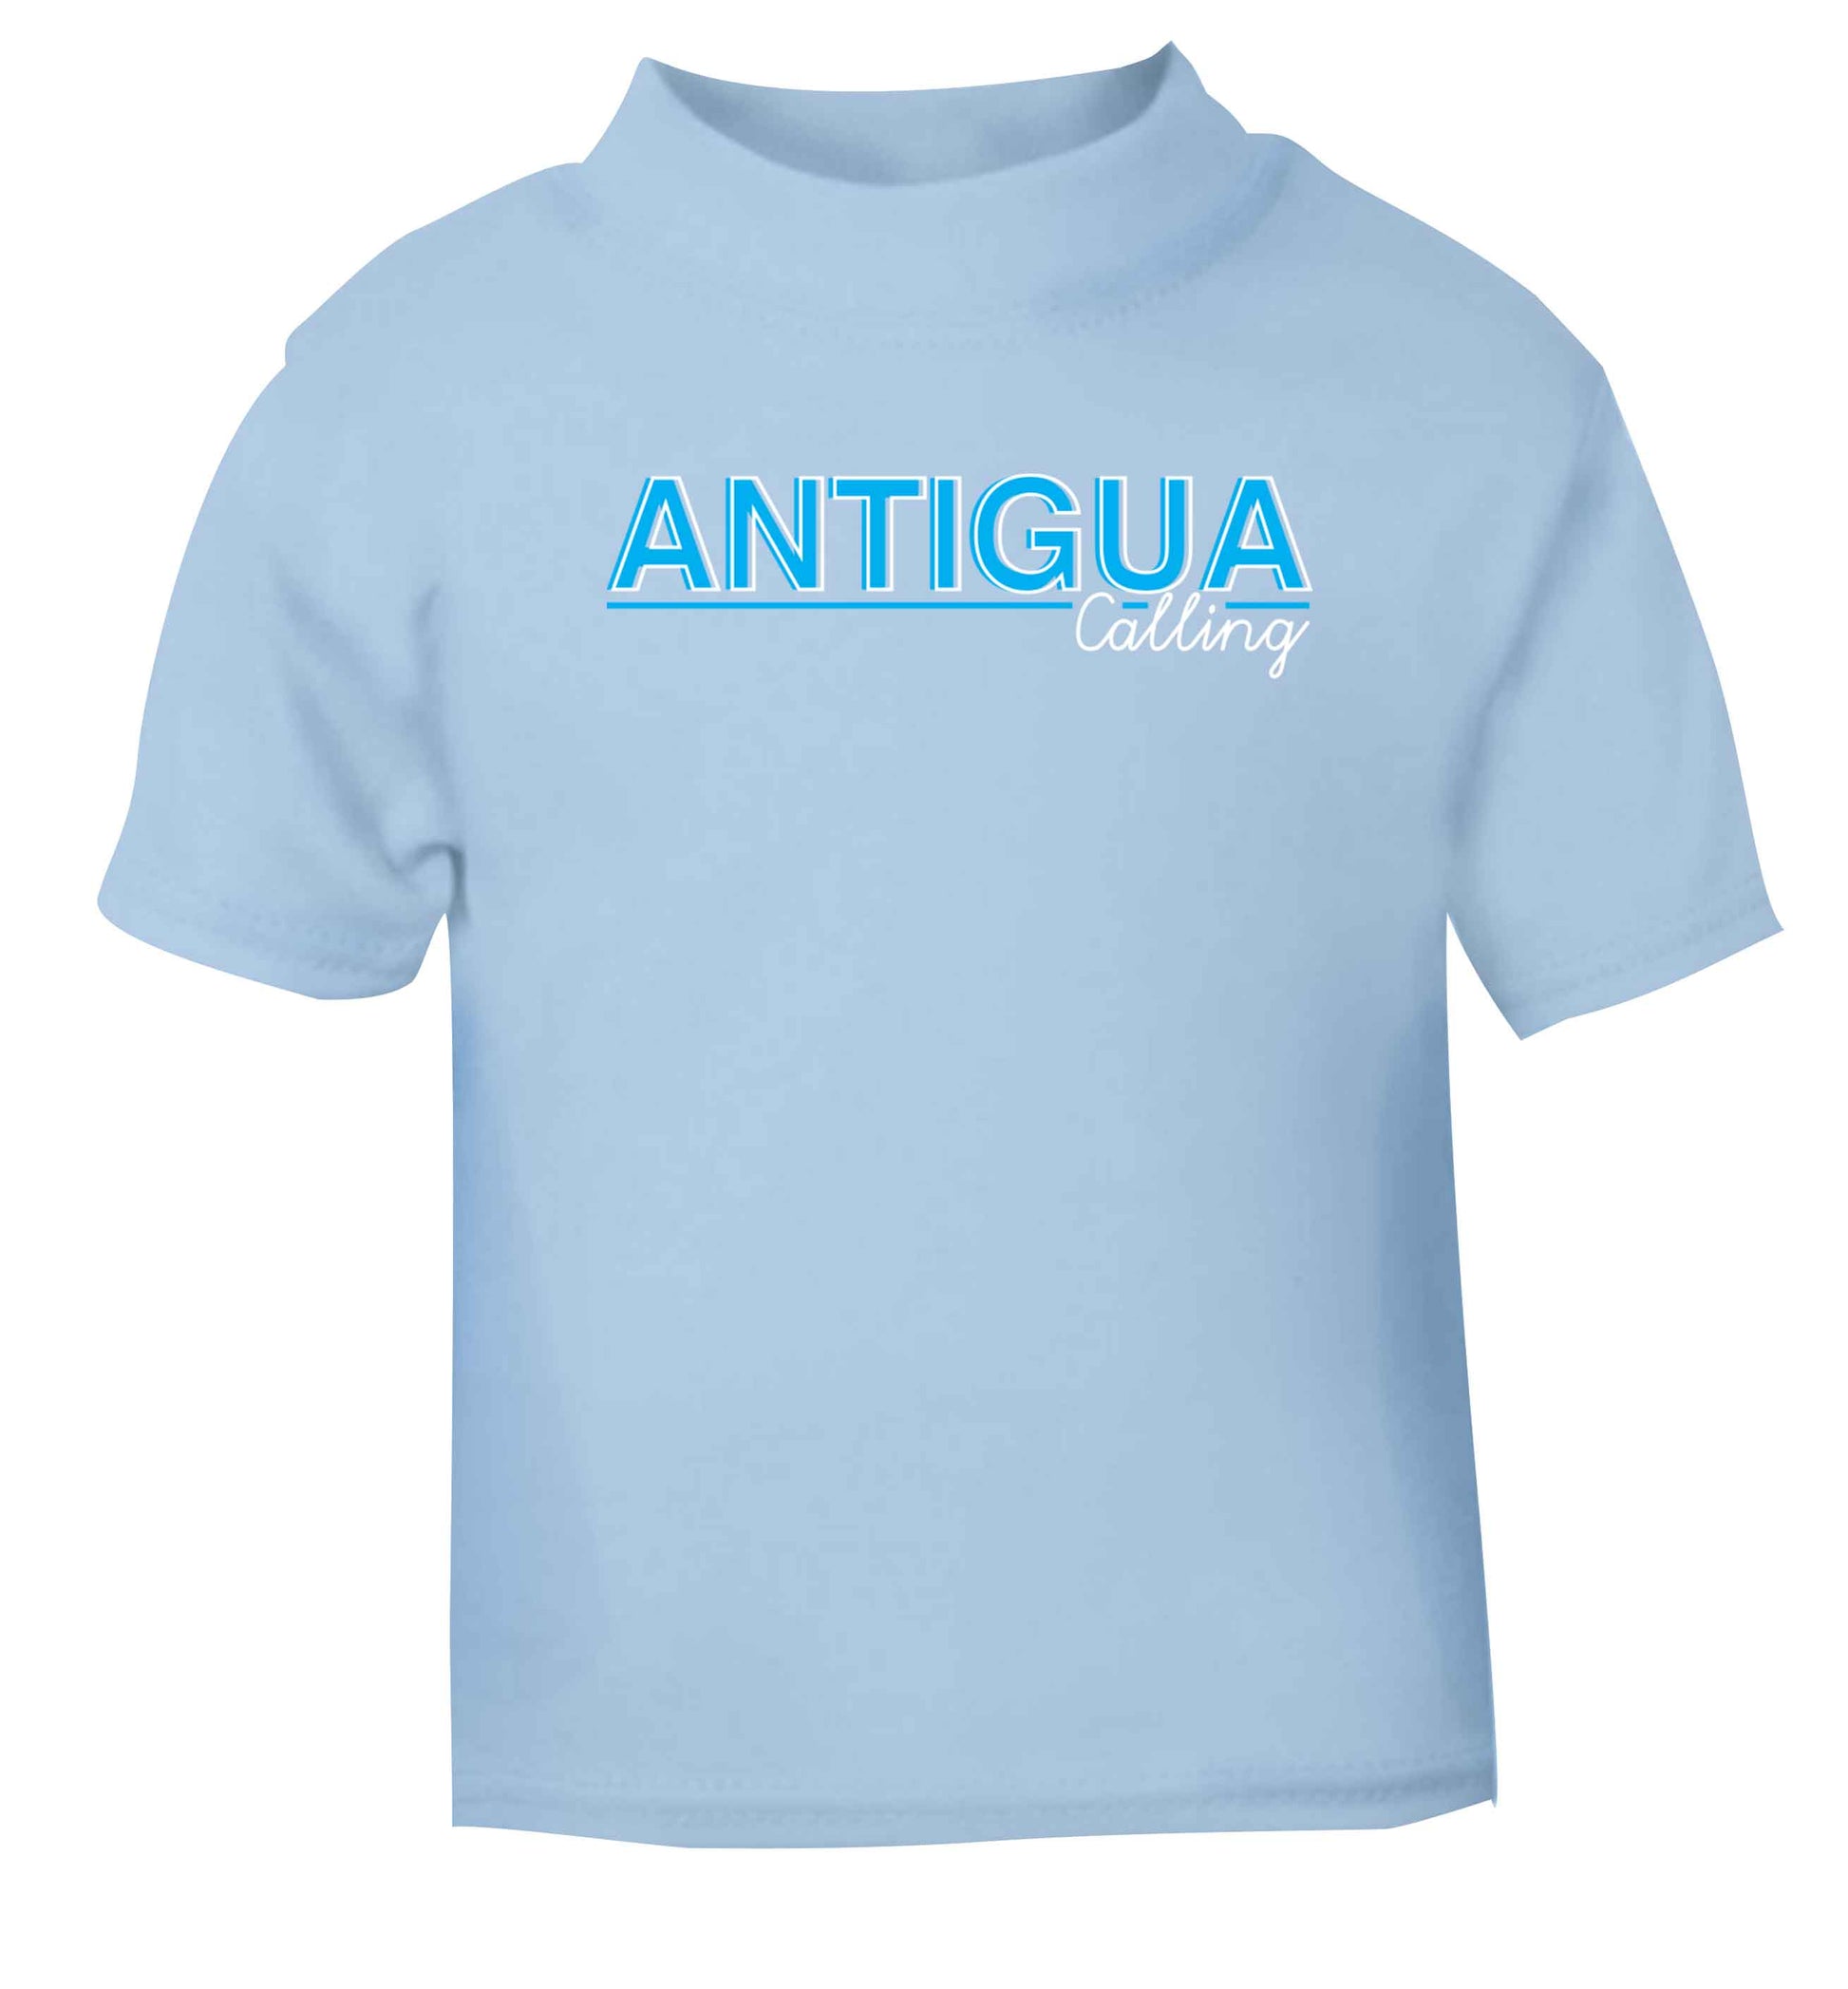 Antigua calling light blue Baby Toddler Tshirt 2 Years